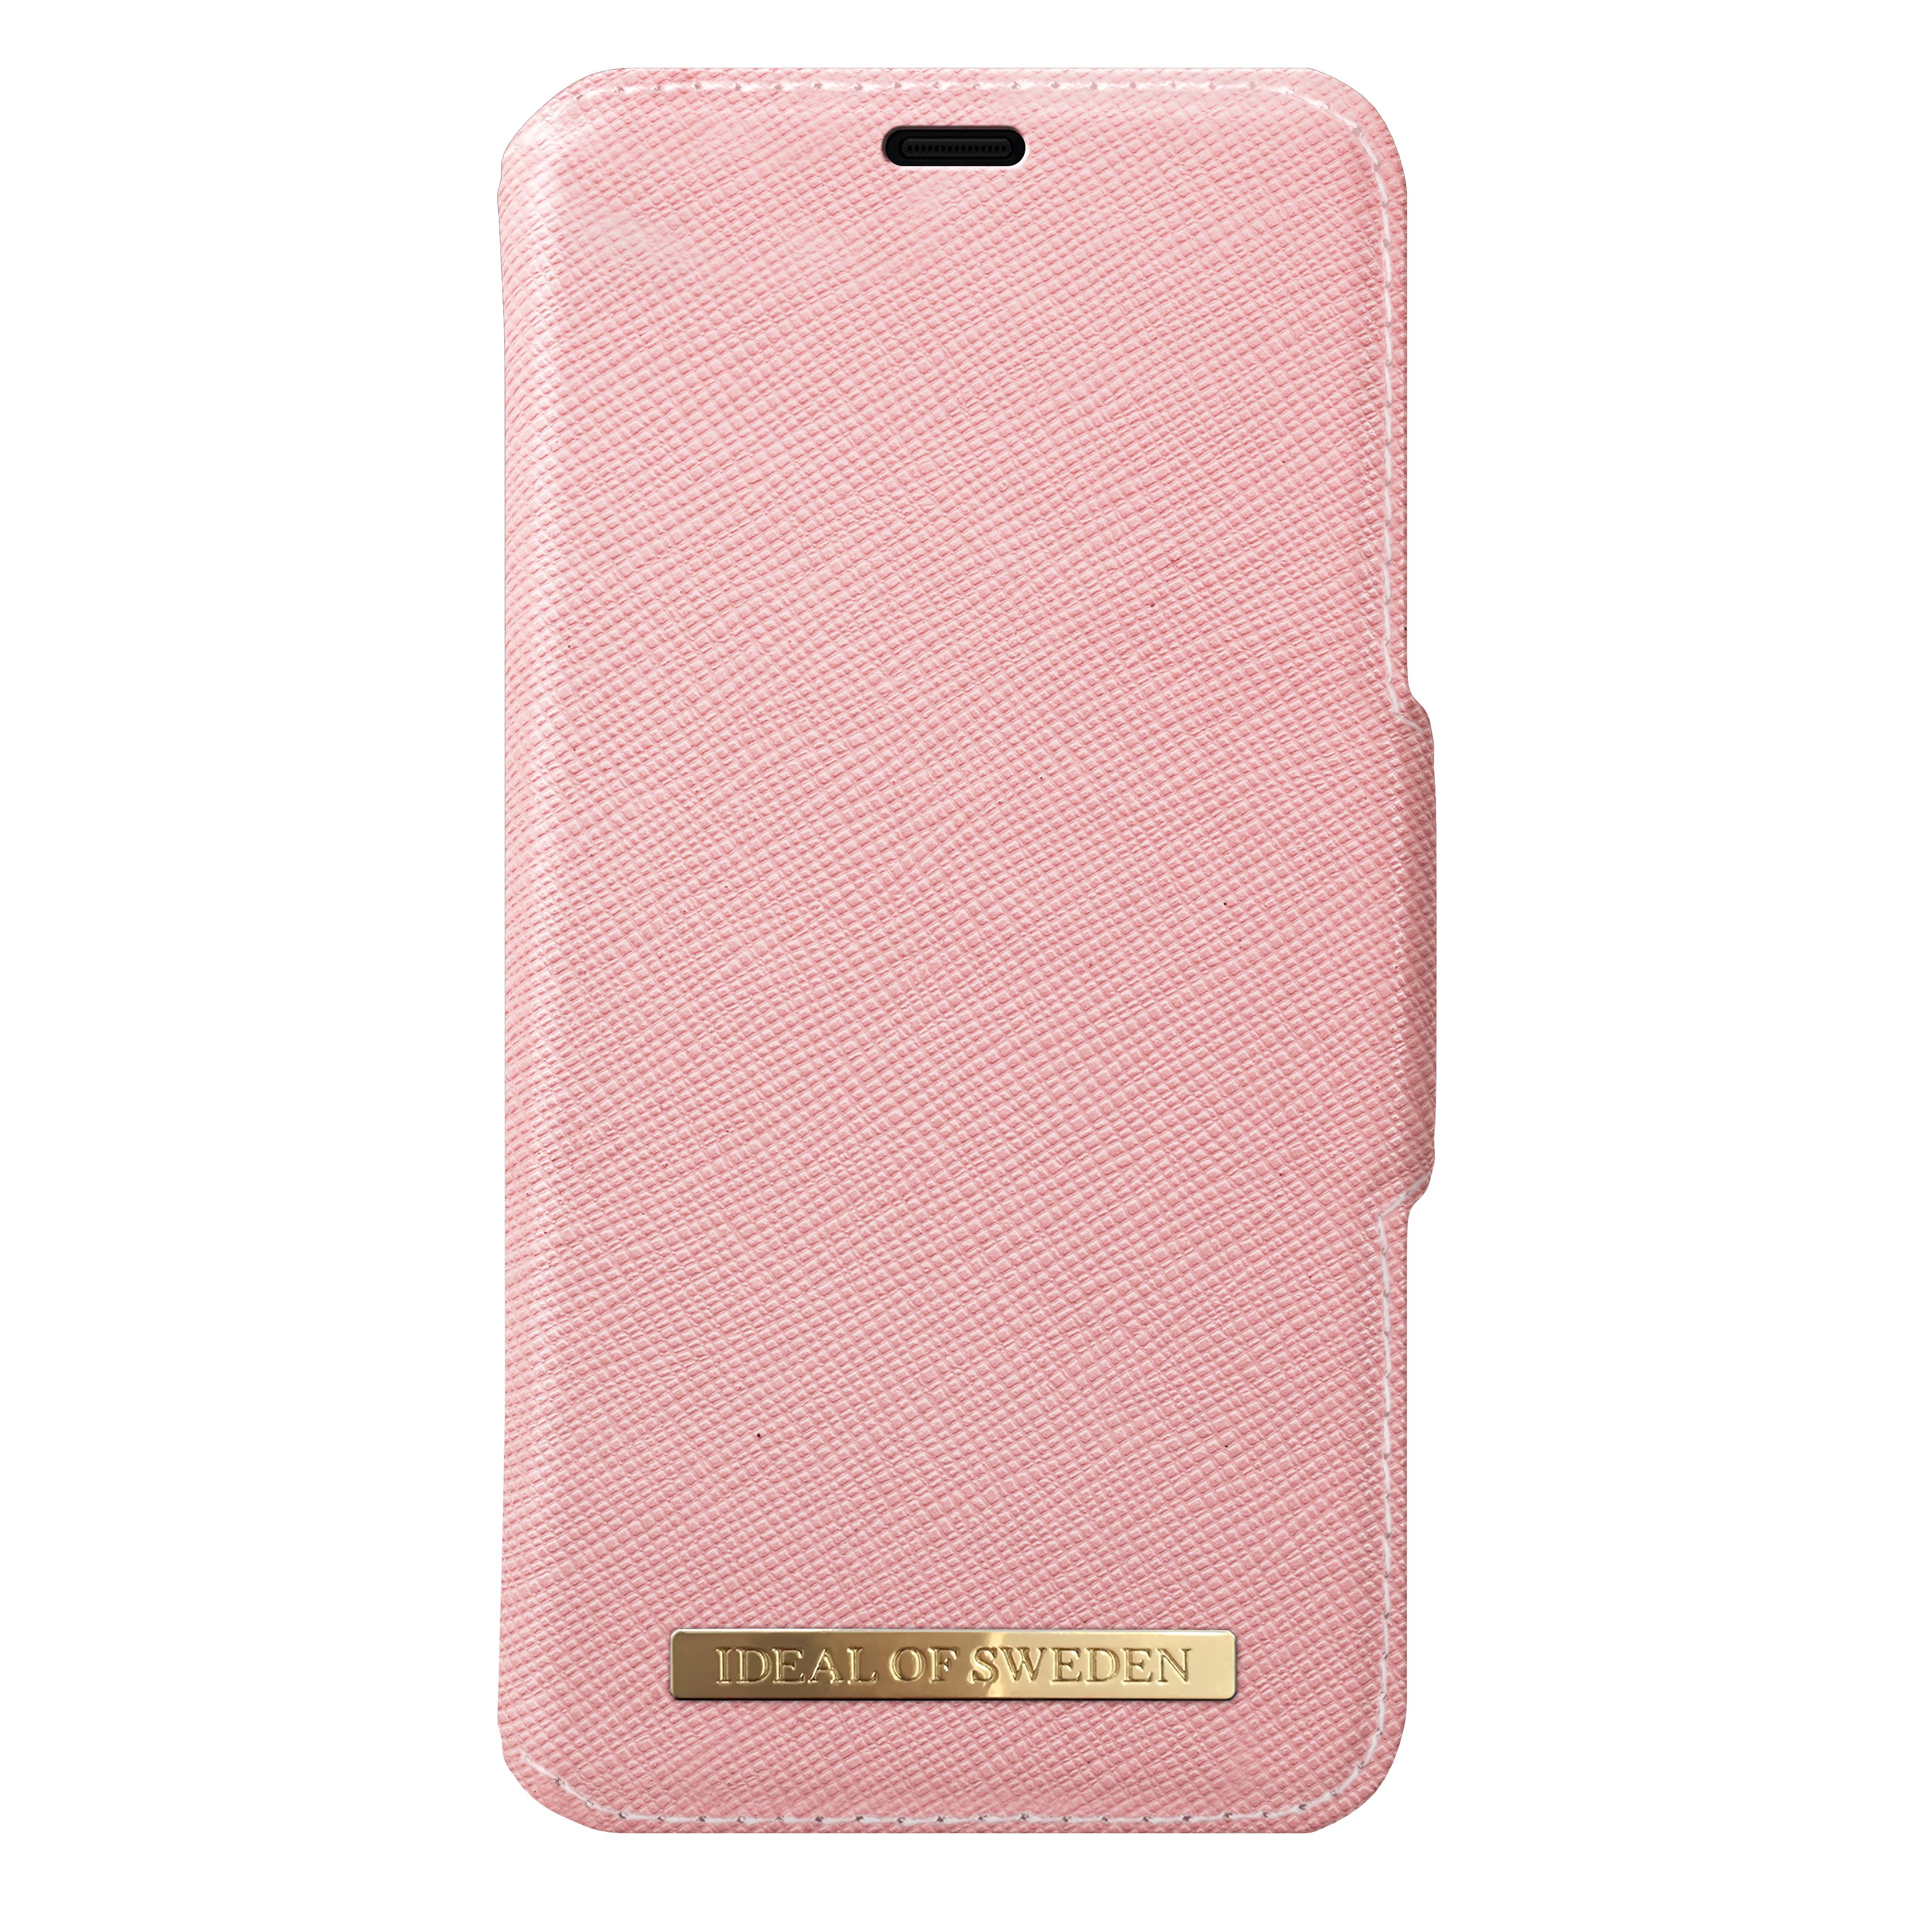 Fashion Wallet Galaxy S10 Plus Pink